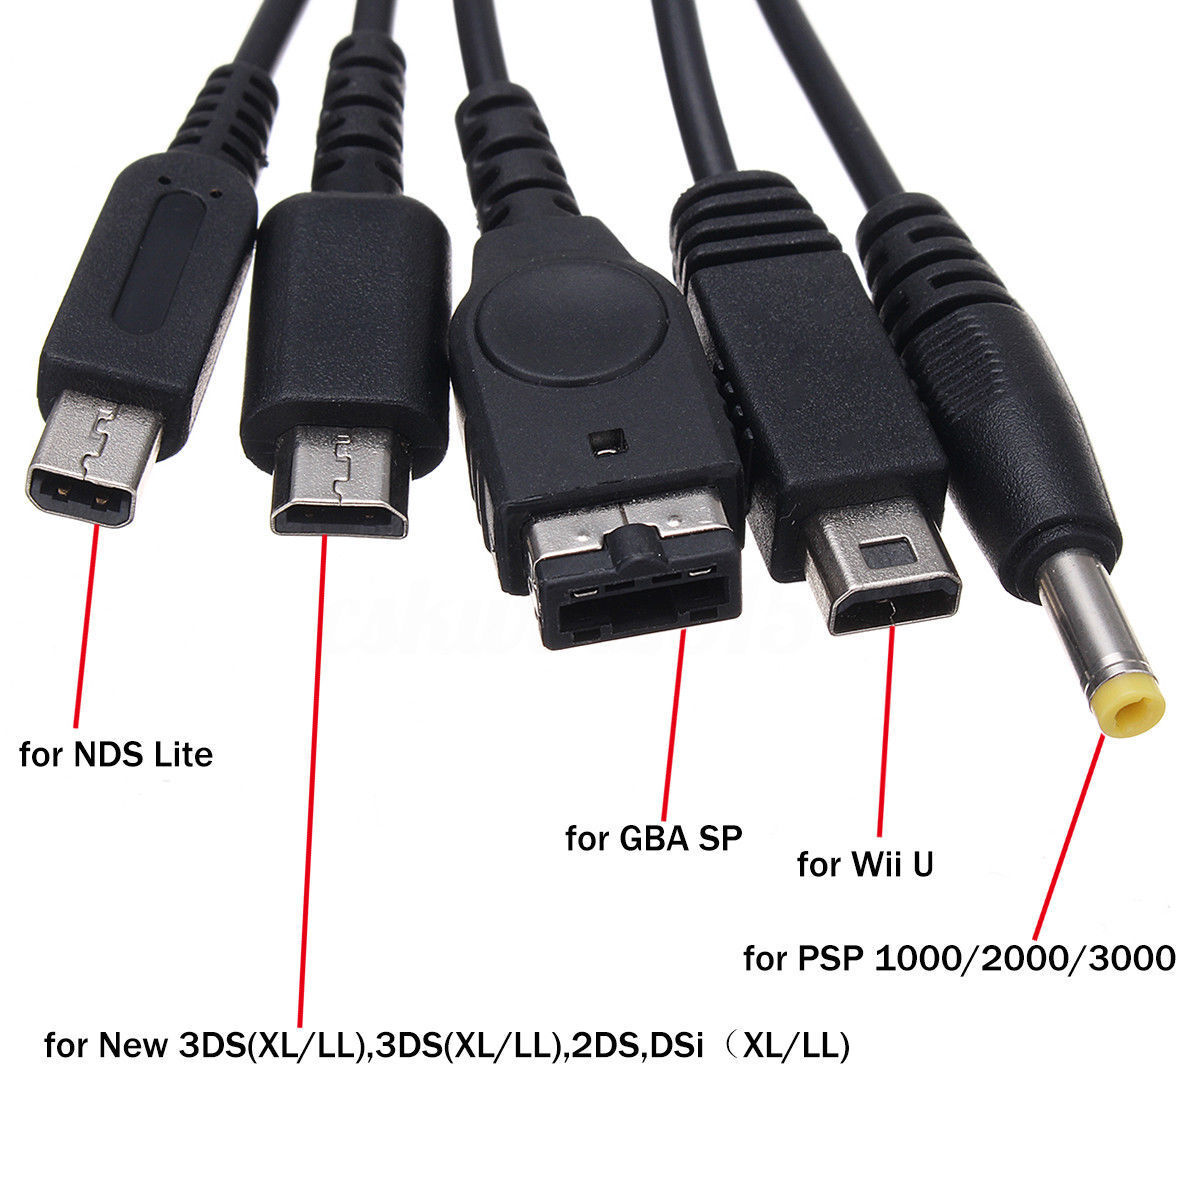 in 1 NINTENDO DSi DSL DSi XL Game Boy U USB CHARGER CABLE LEAD | eBay